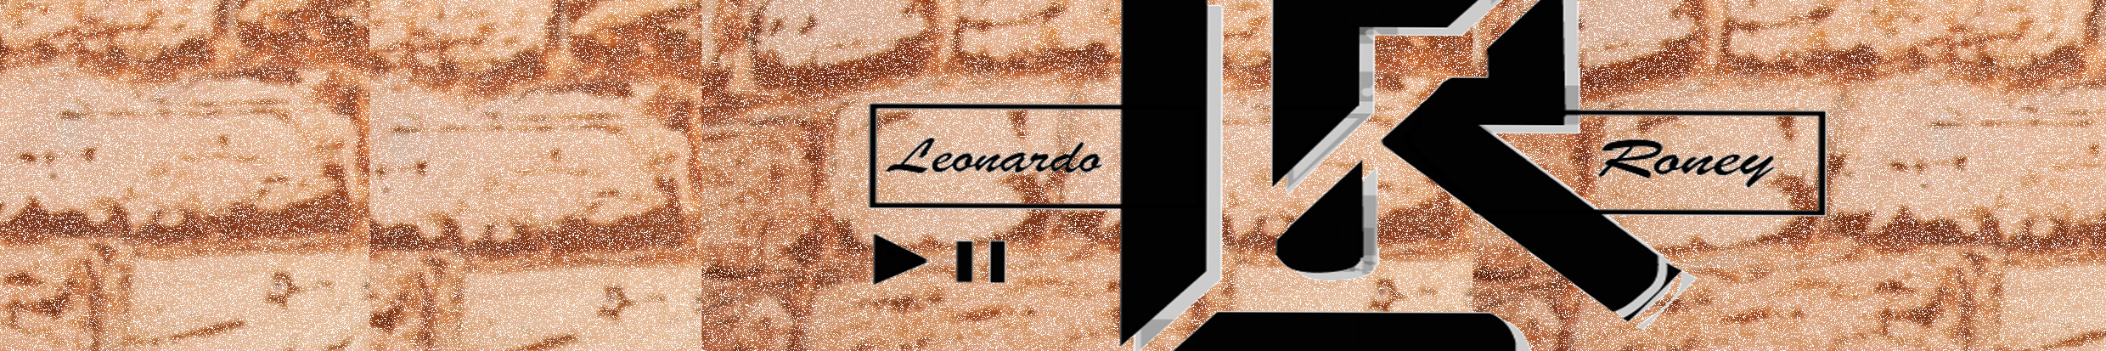 Leonardo Roney